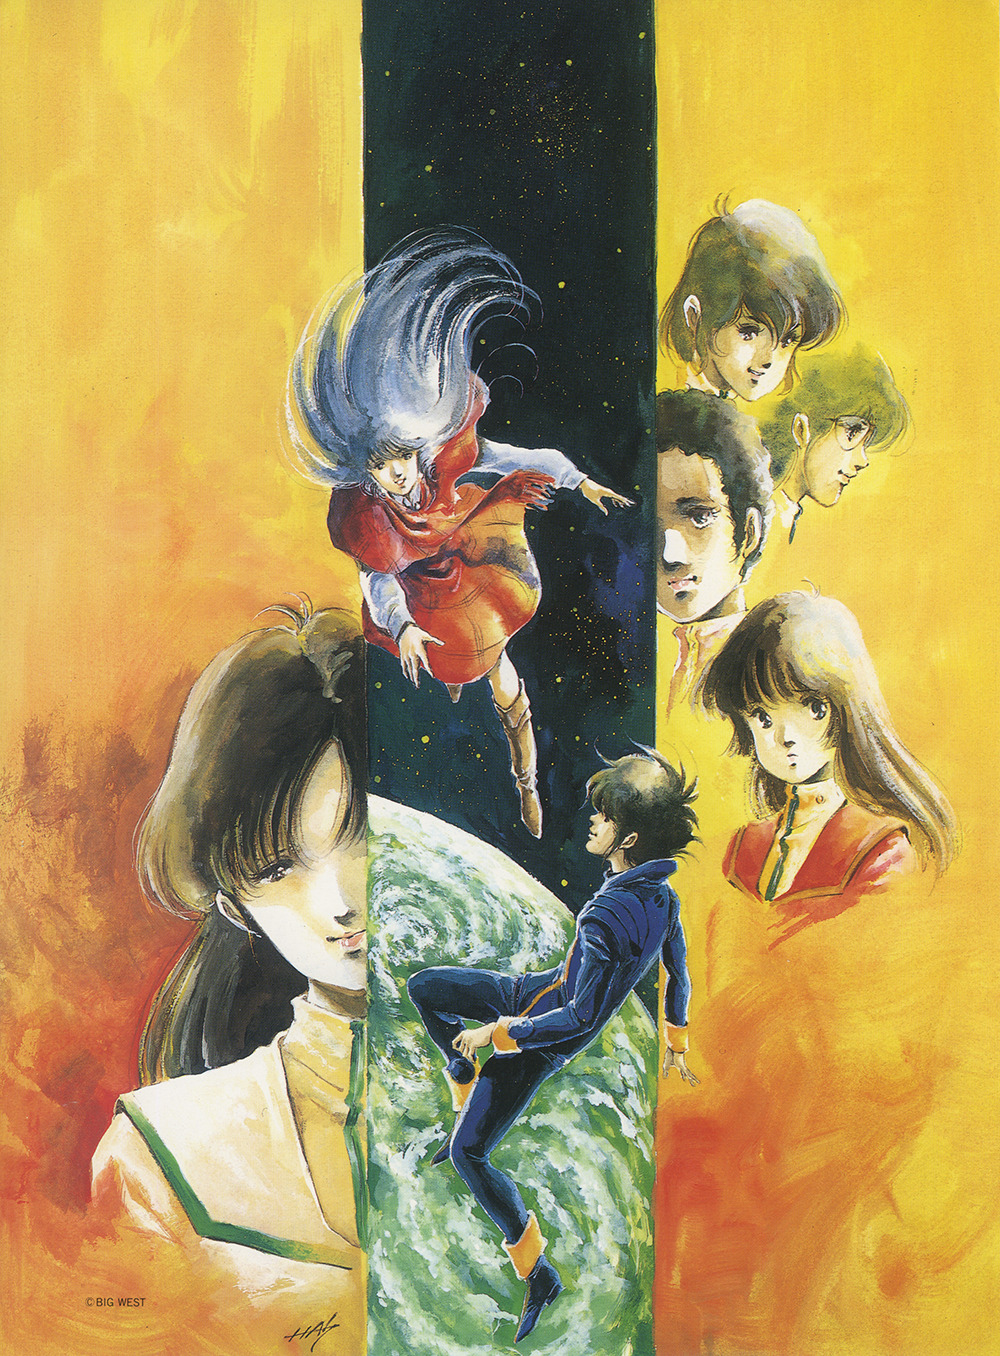 Anime 1000x1356 Macross poster movie poster Hikaru Ichijyo lynn Minmay illustration Idol